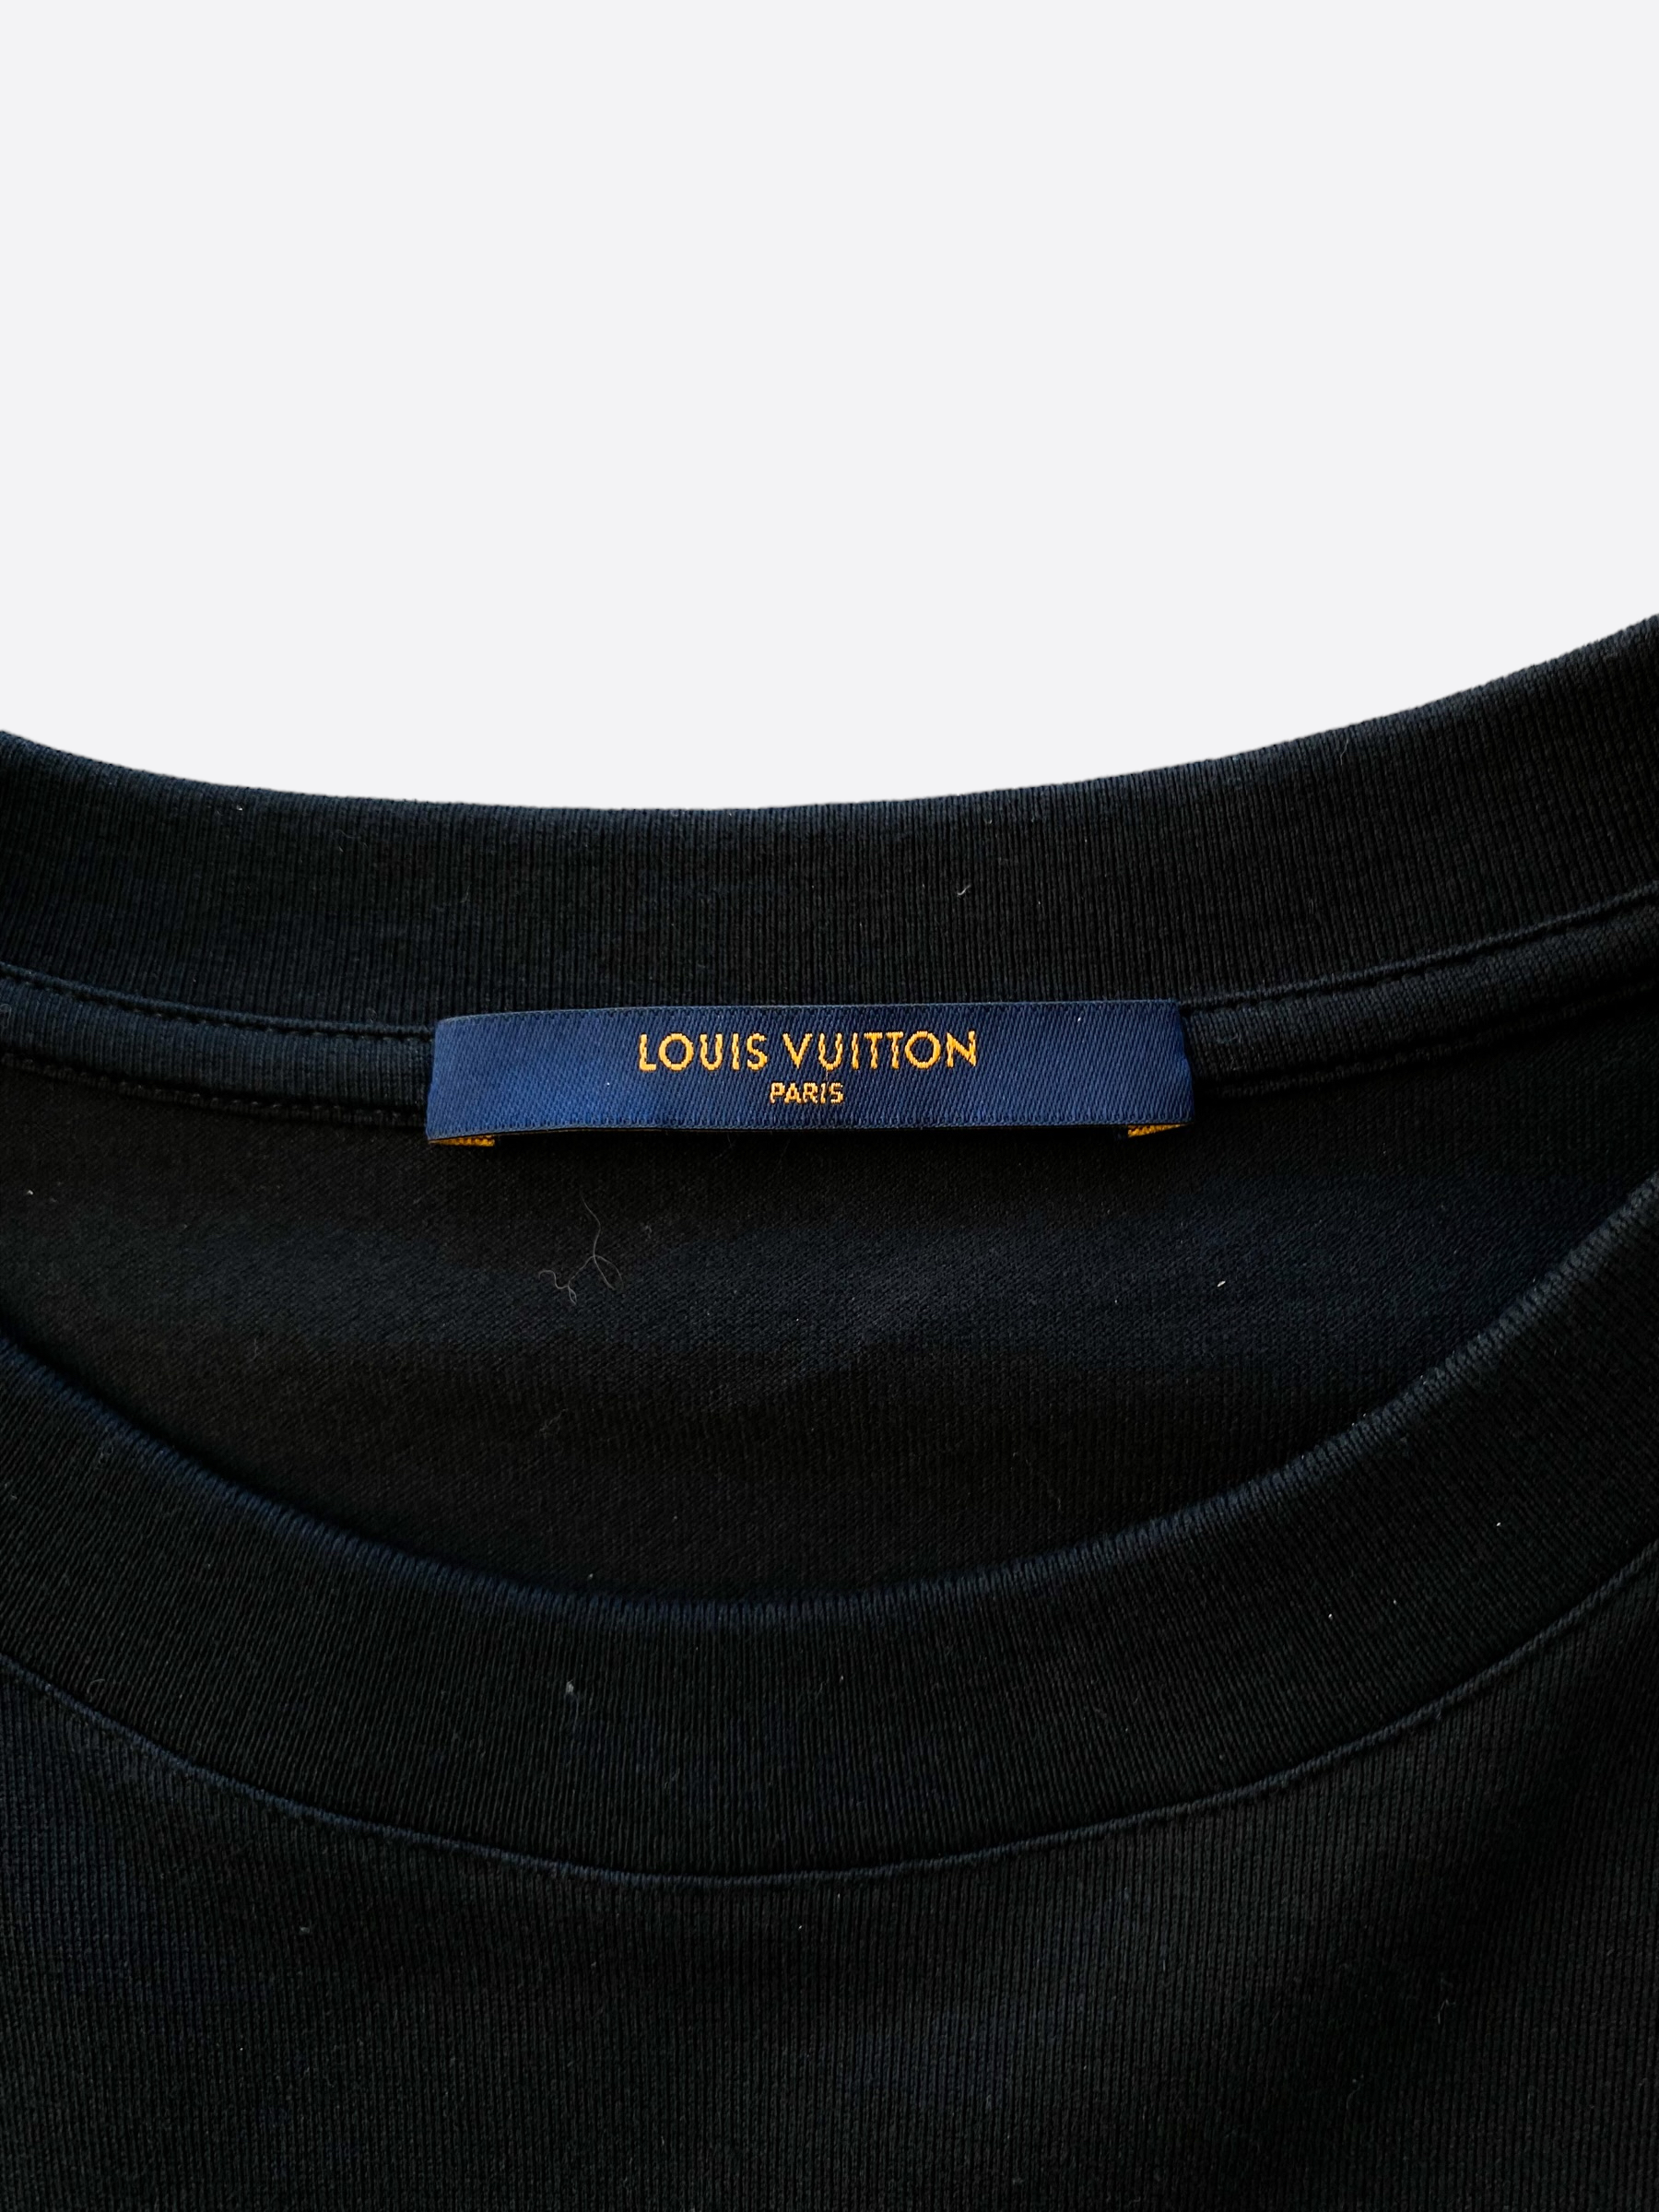 Louis Vuitton Smoke Print Tee.